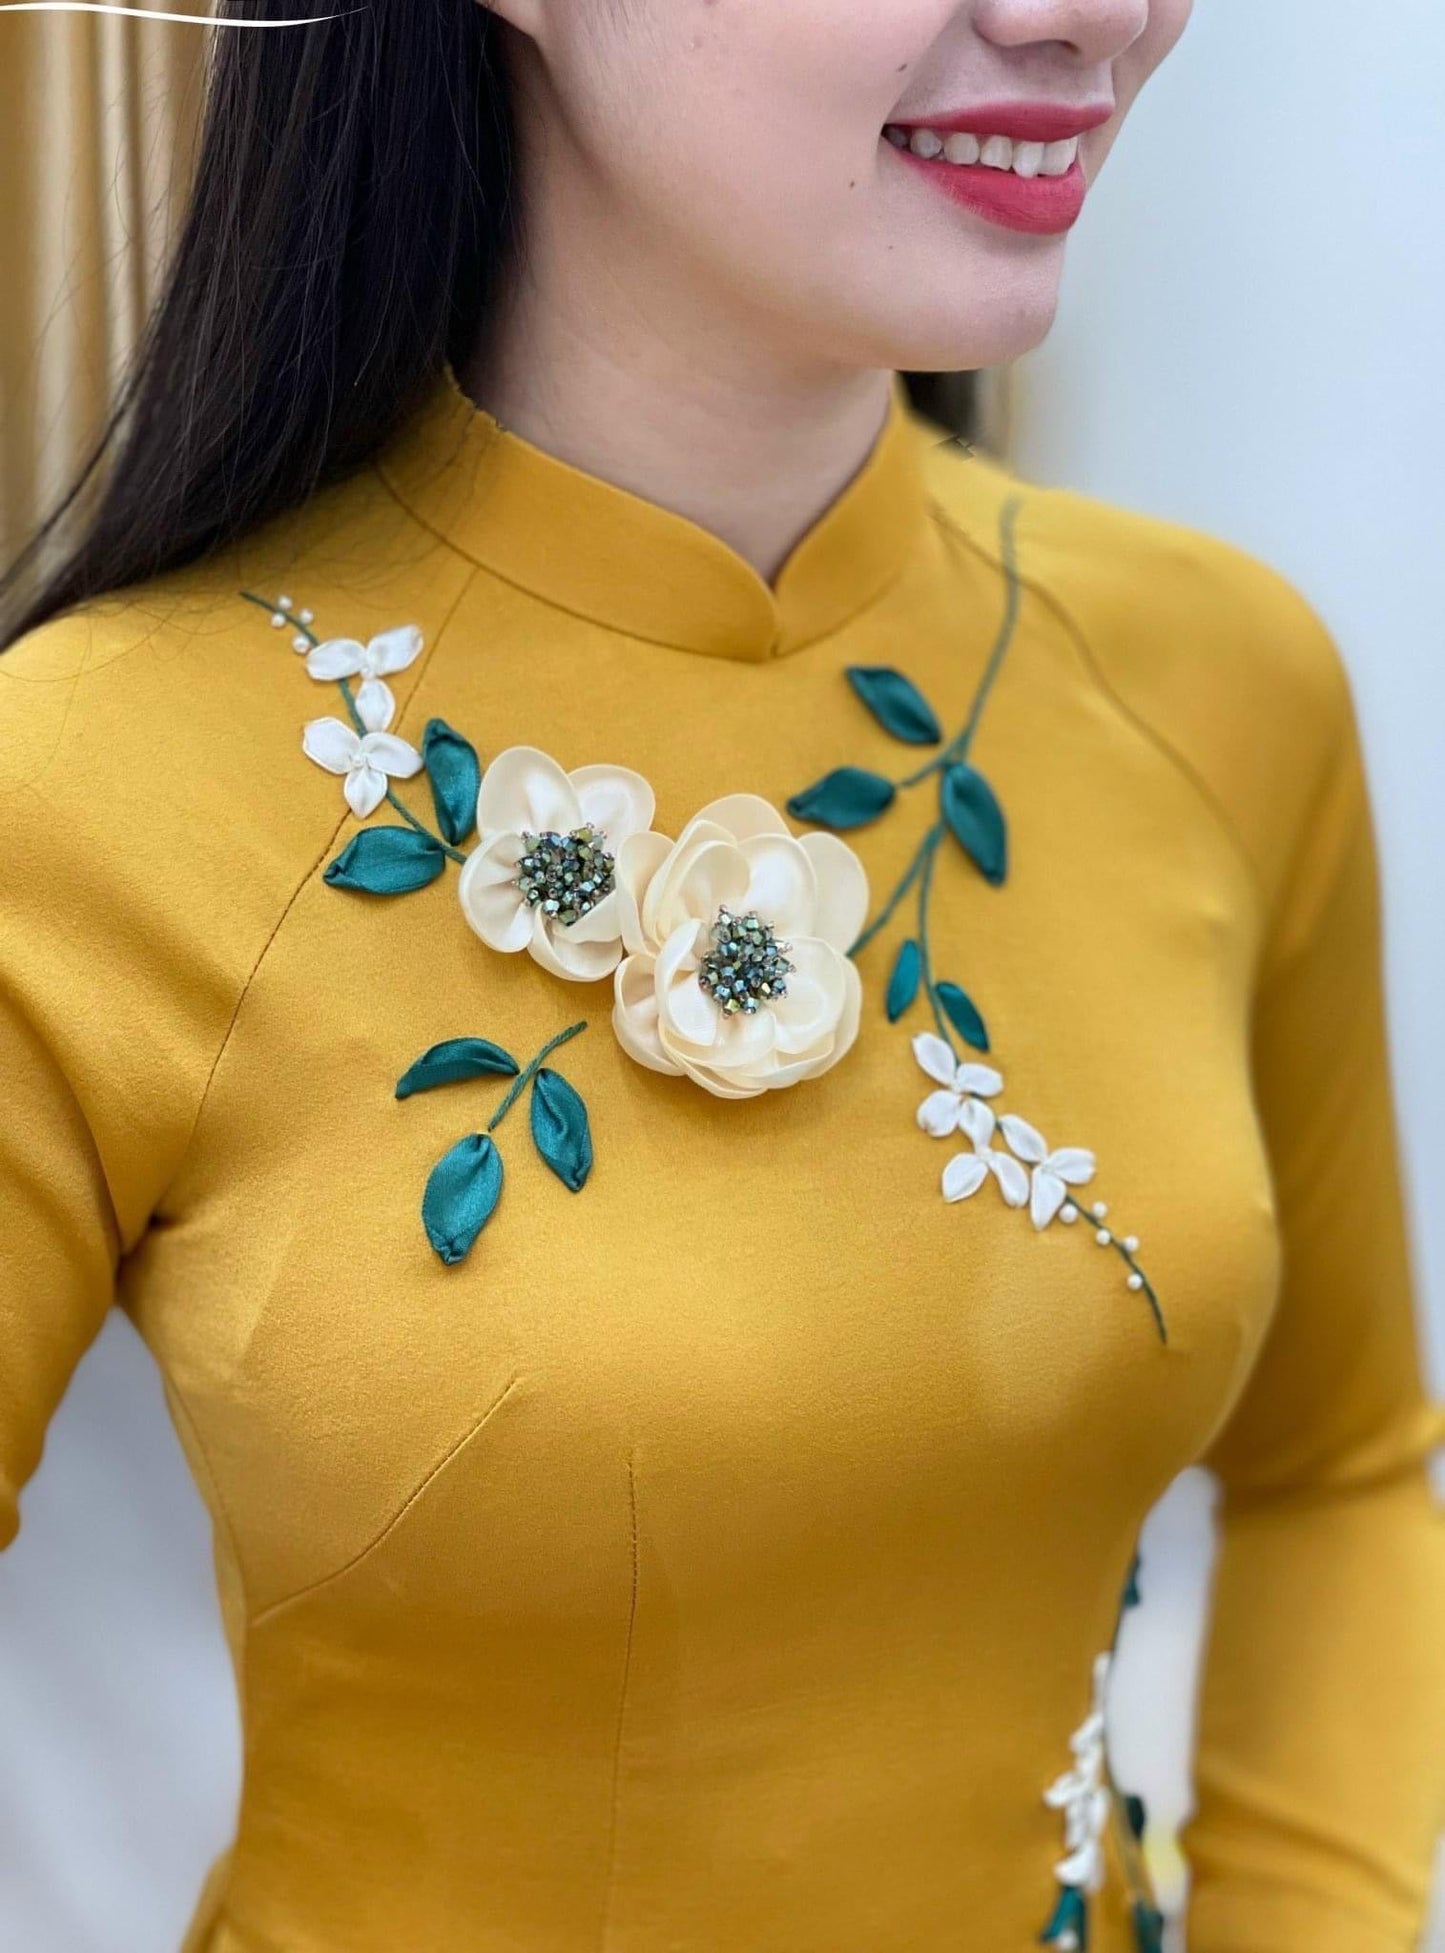 591 - Áo Dài Lụa Tuyết Gold Hand Embroidery Flower